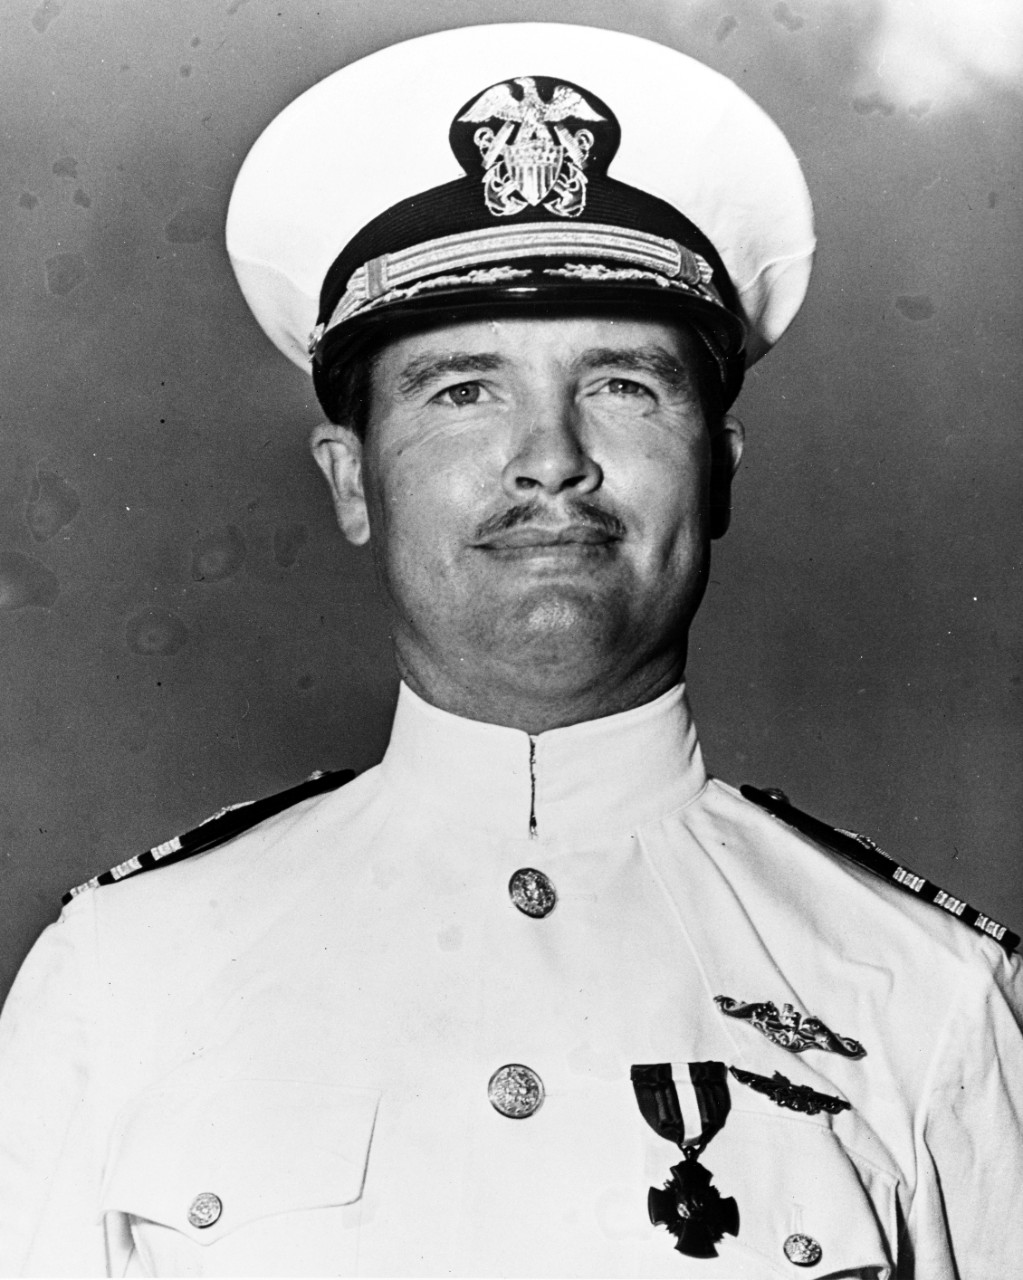 Photo #: 80-G-81925  Commander Samuel D. Dealey, USN